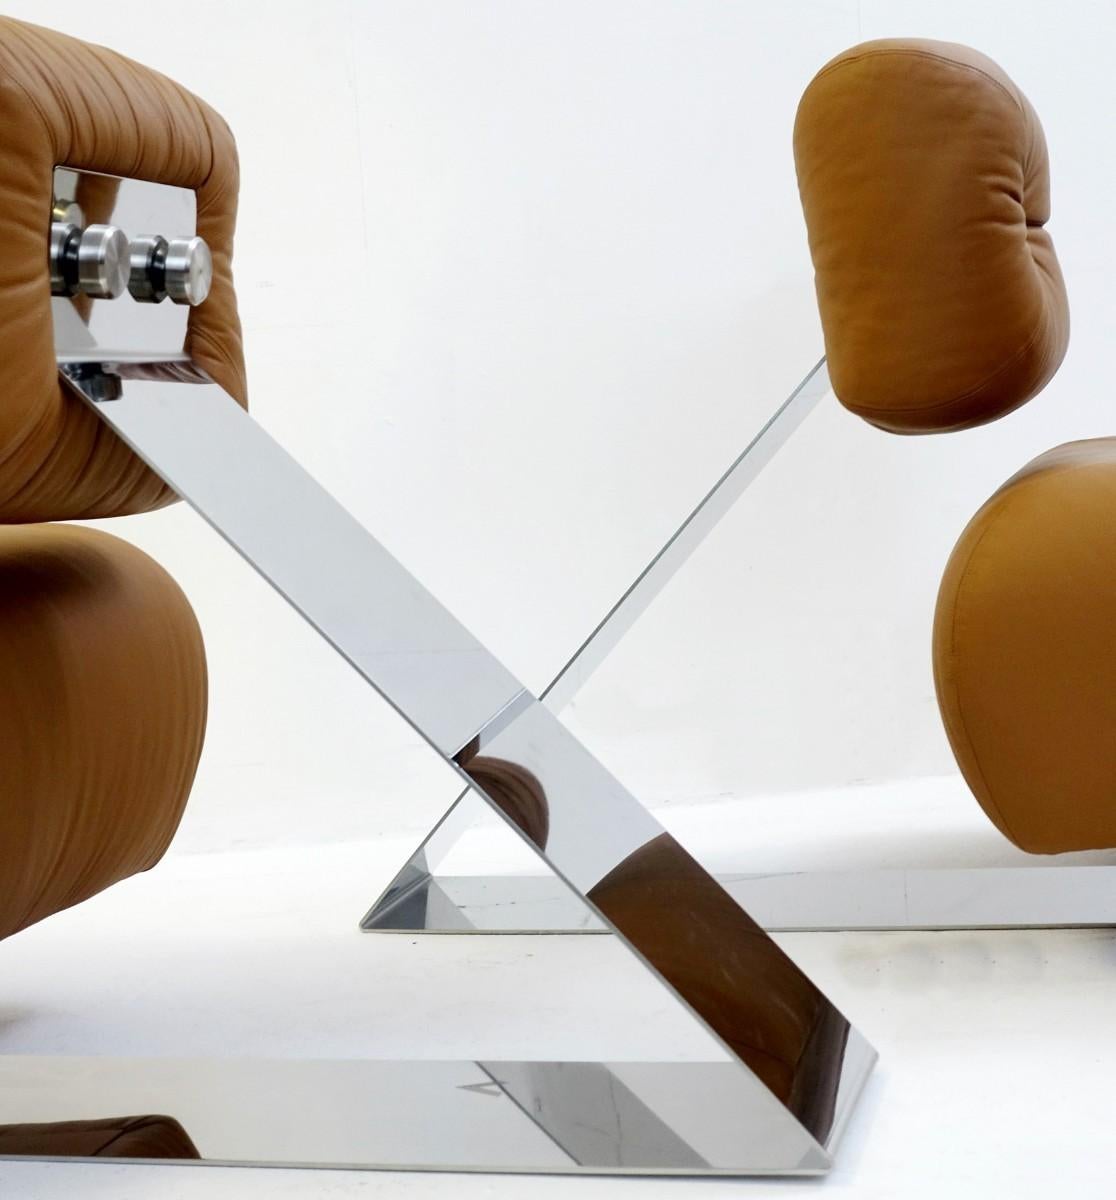 Pair of Cognac leather lounge chairs model 'Aran' by Oscar Niemeyer - 1975.